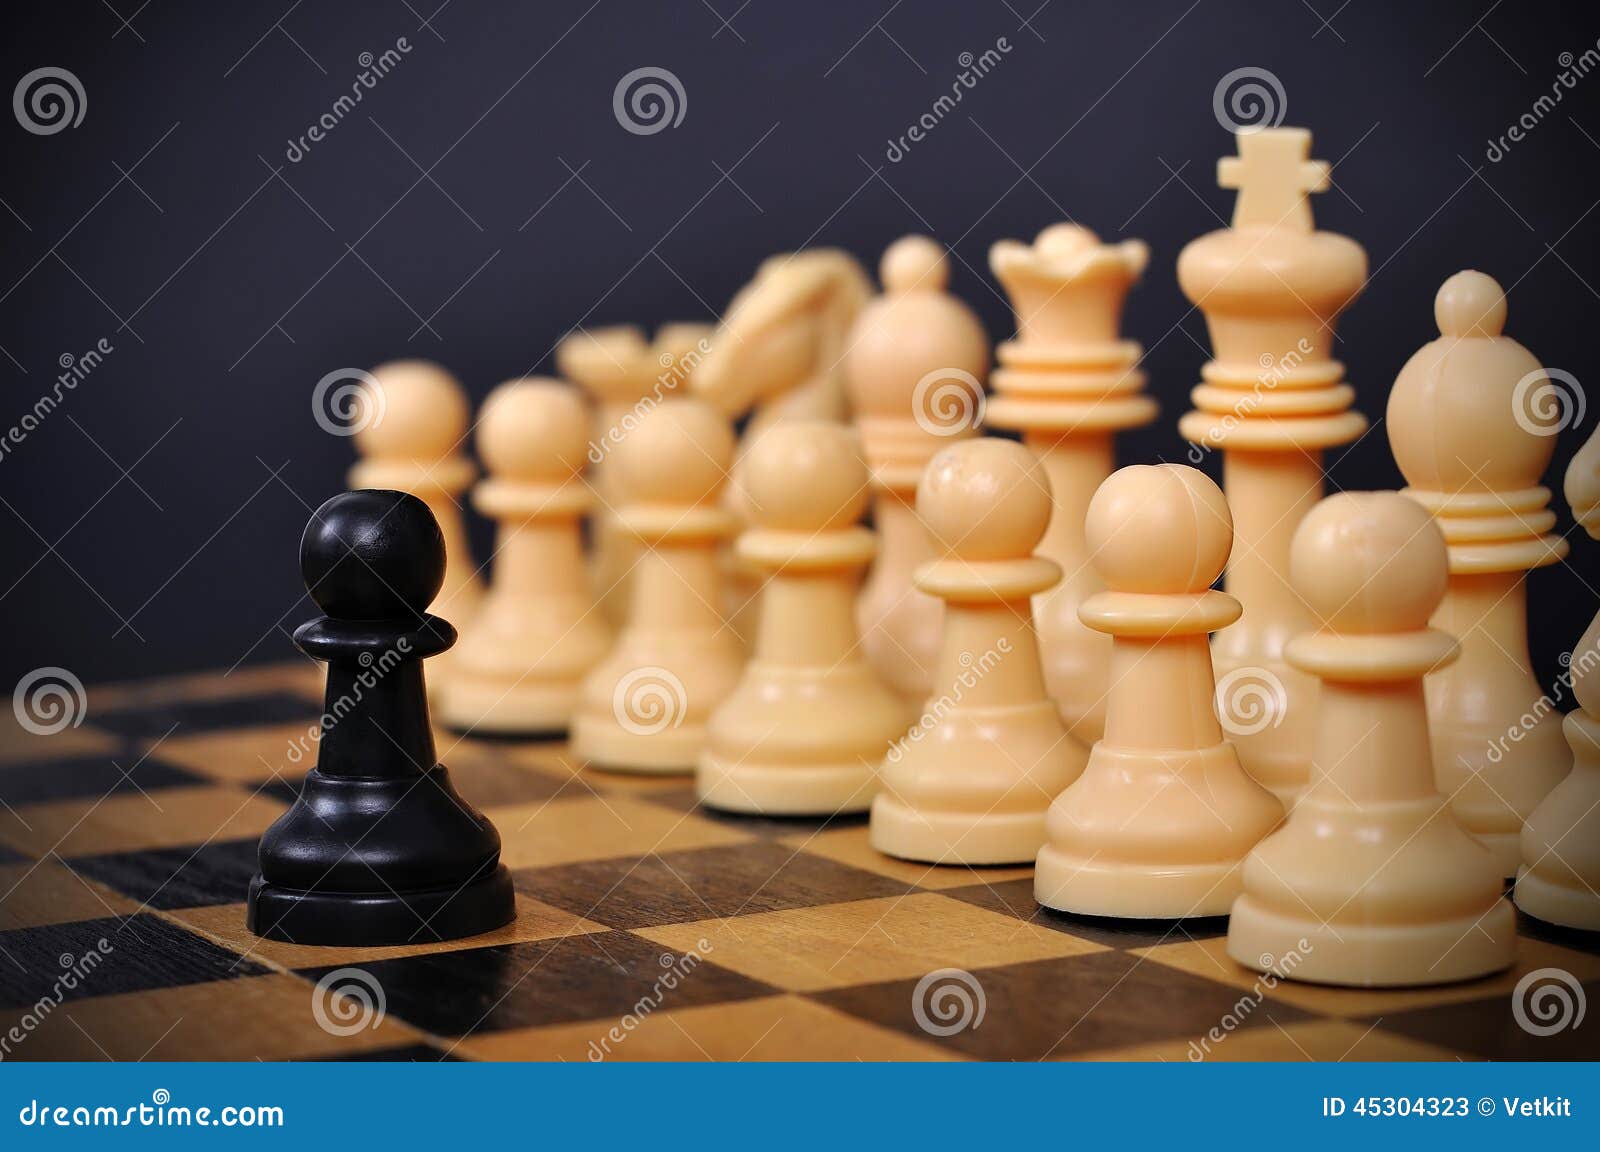 Chess ID